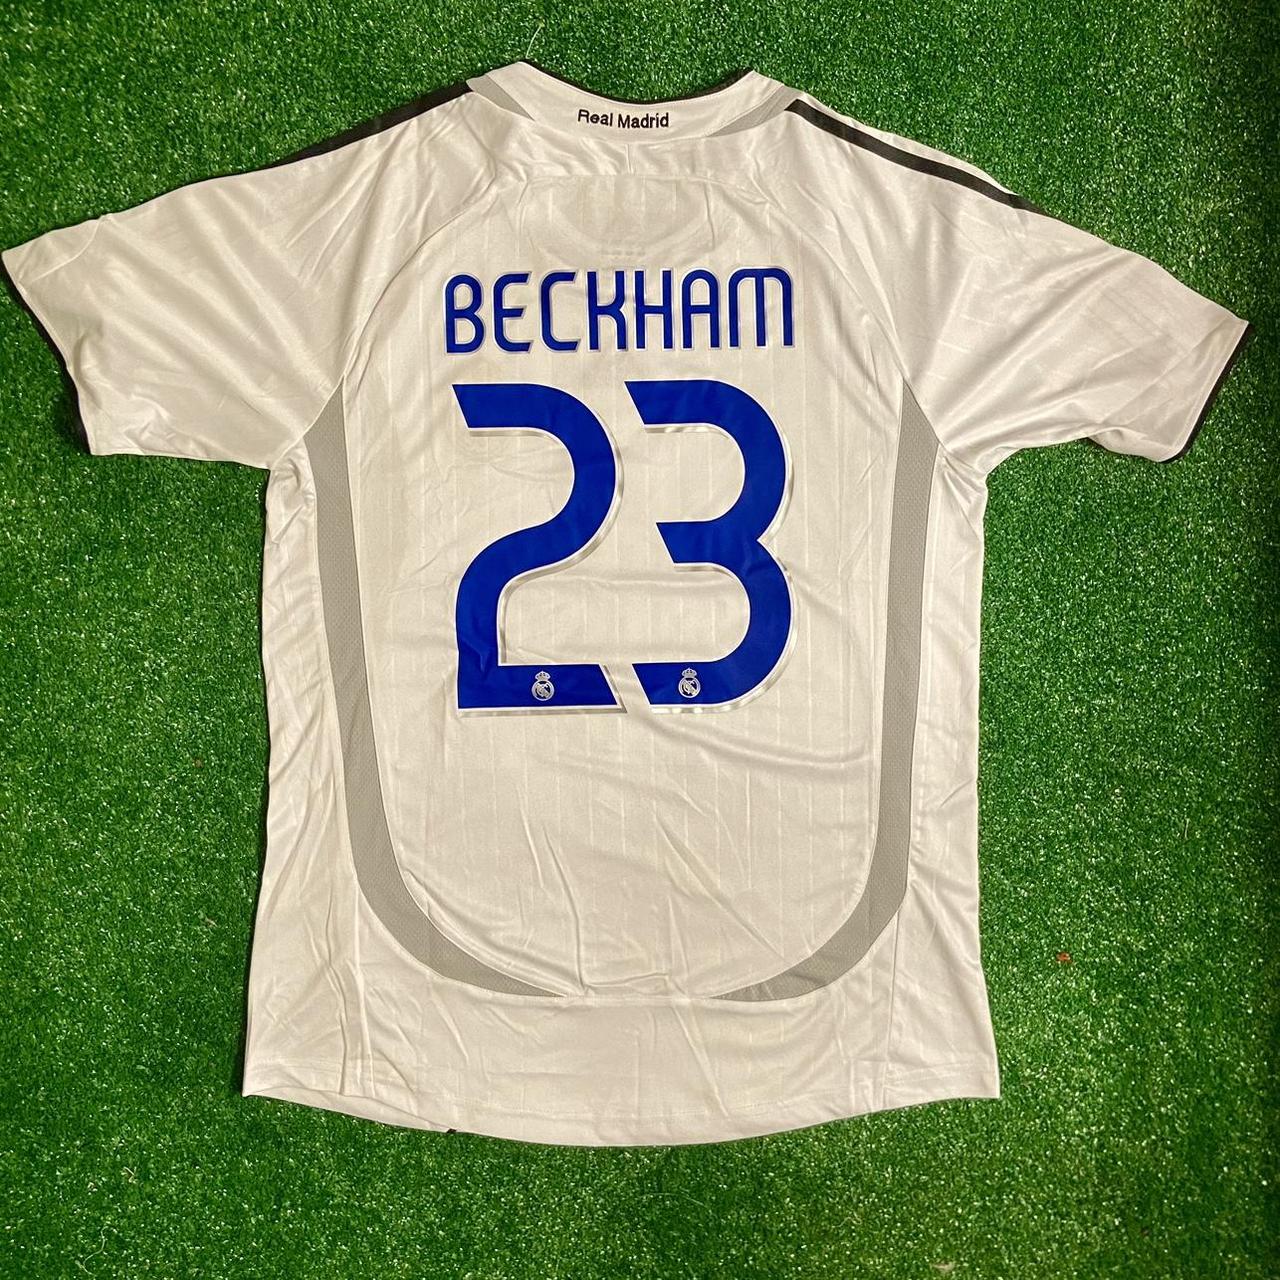 Real Madrid Home Jersey 06/07 Beckham 🏴󠁧󠁢󠁥󠁮󠁧󠁿 Size... - Depop